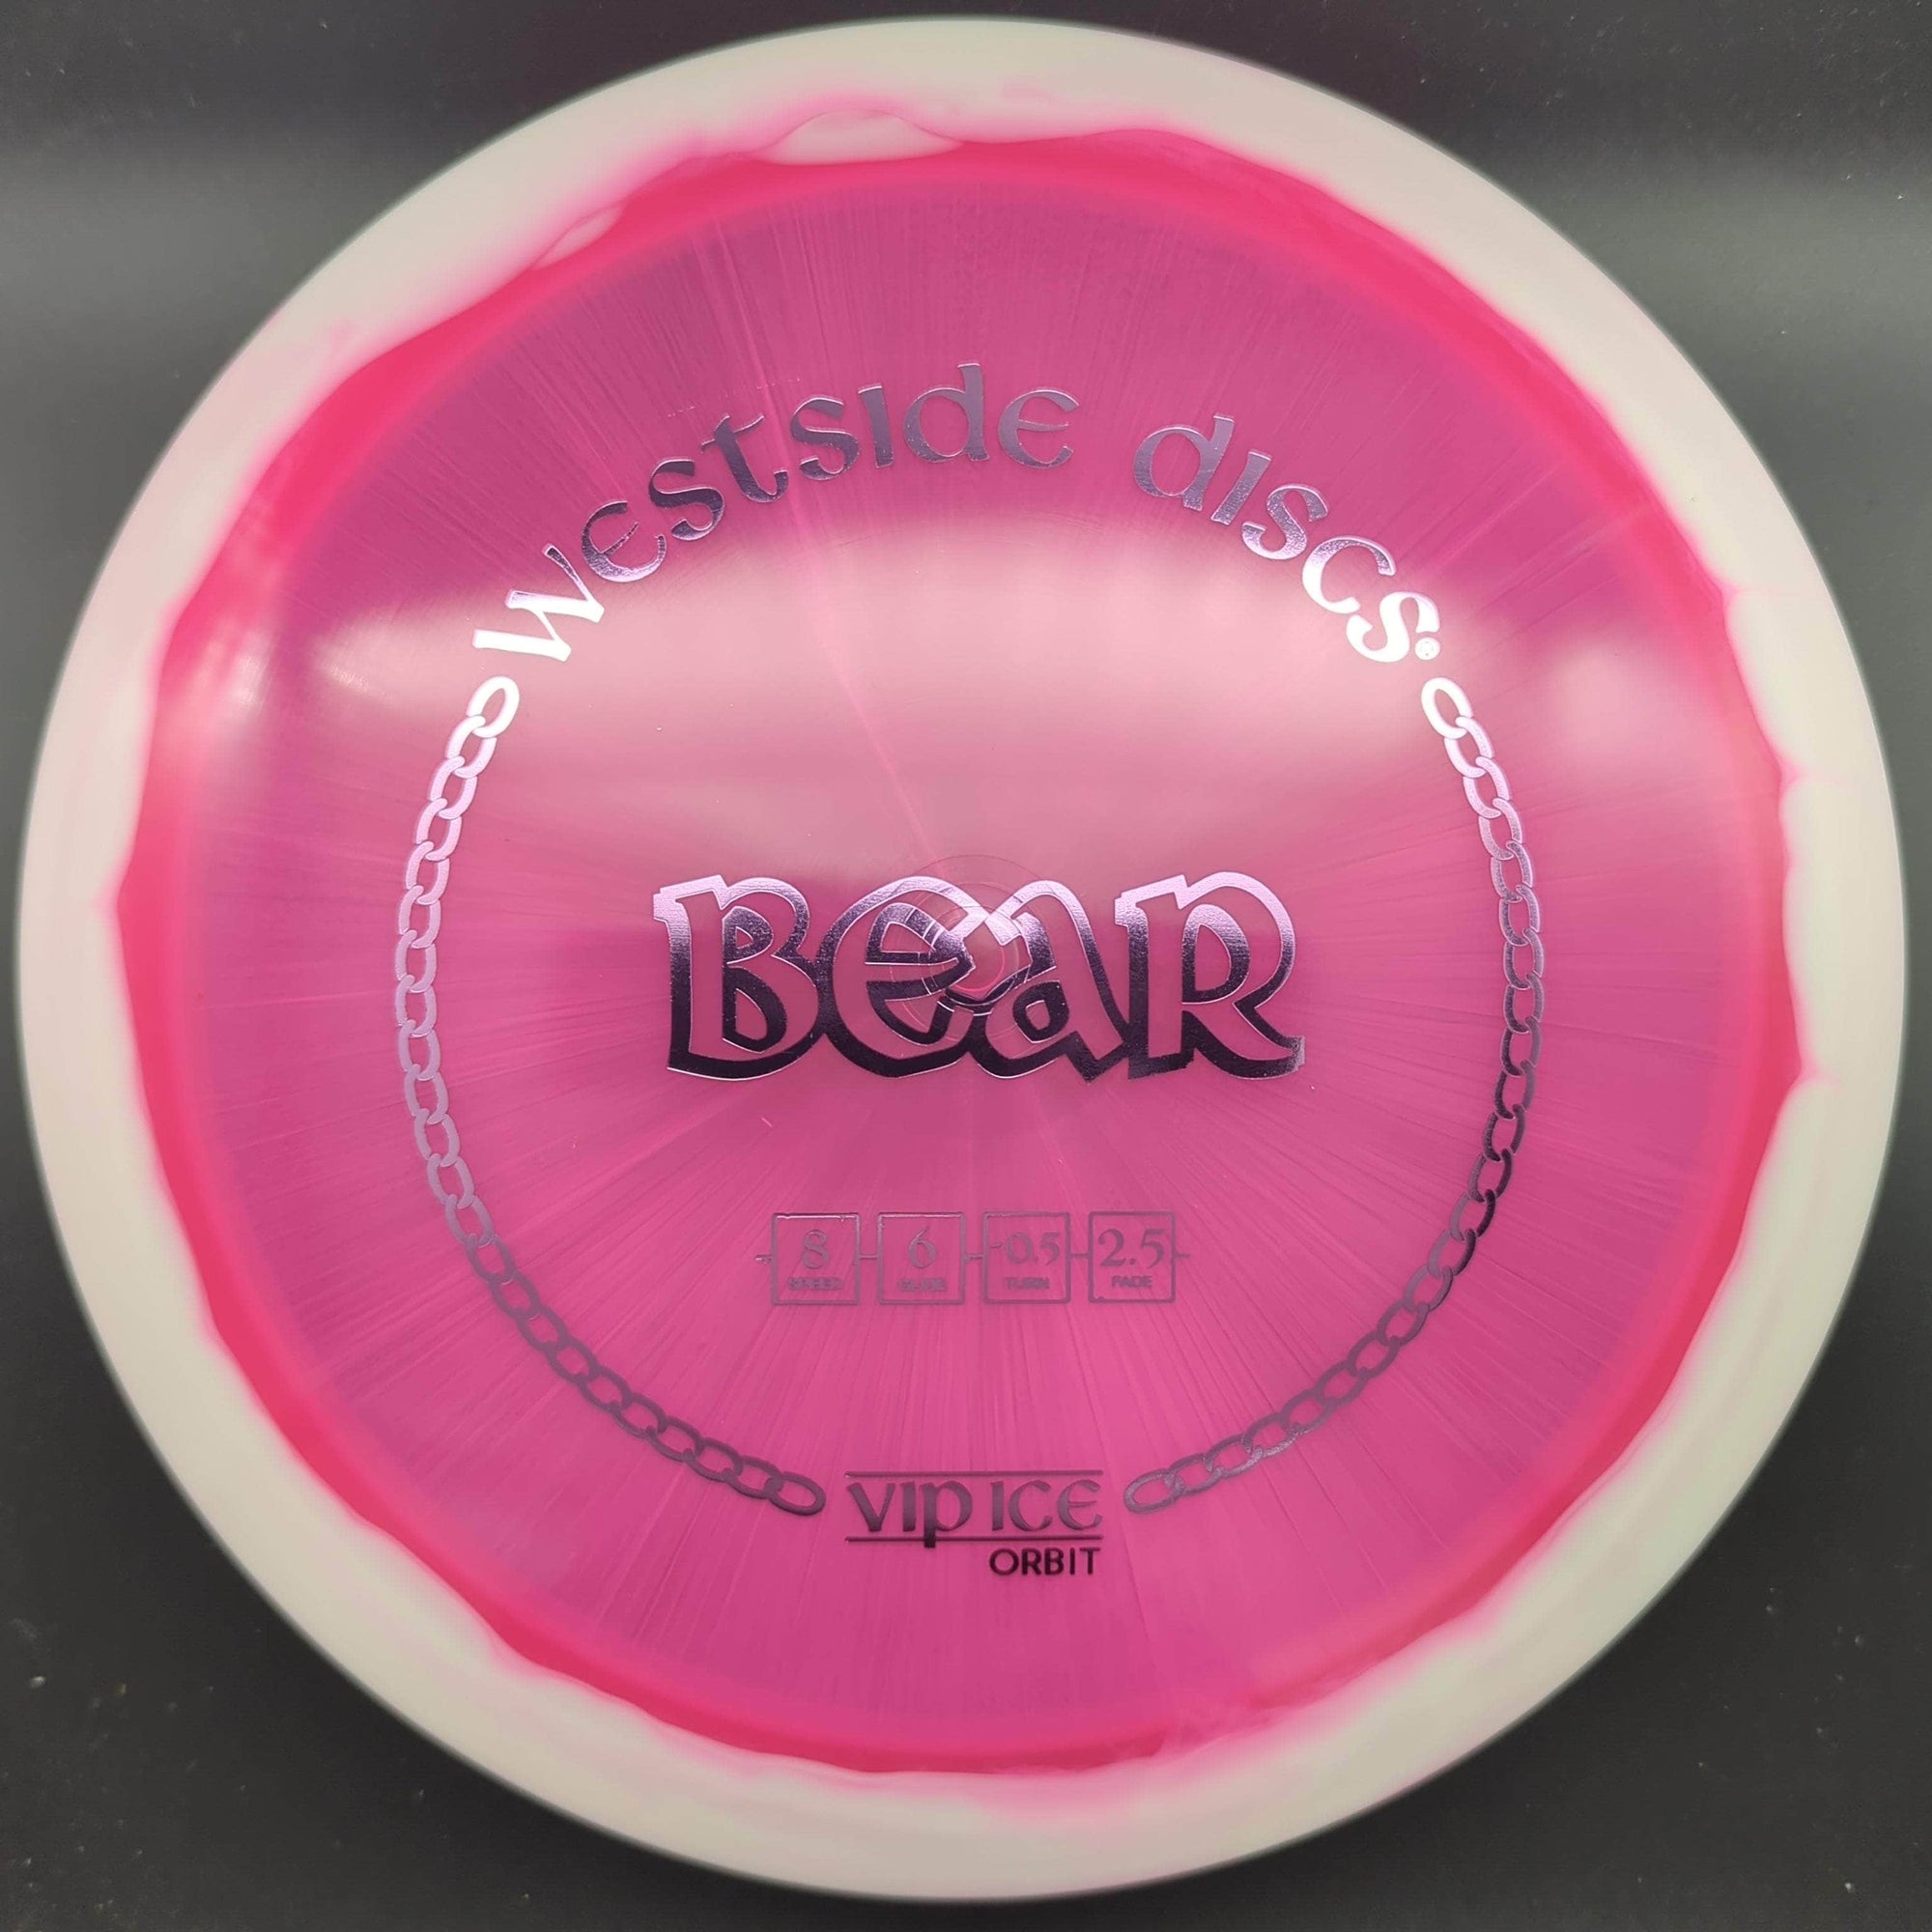 Westside Discs Fairway Driver Pink Pink Stamp 176g Bear, VIP Ice Orbit Plastic